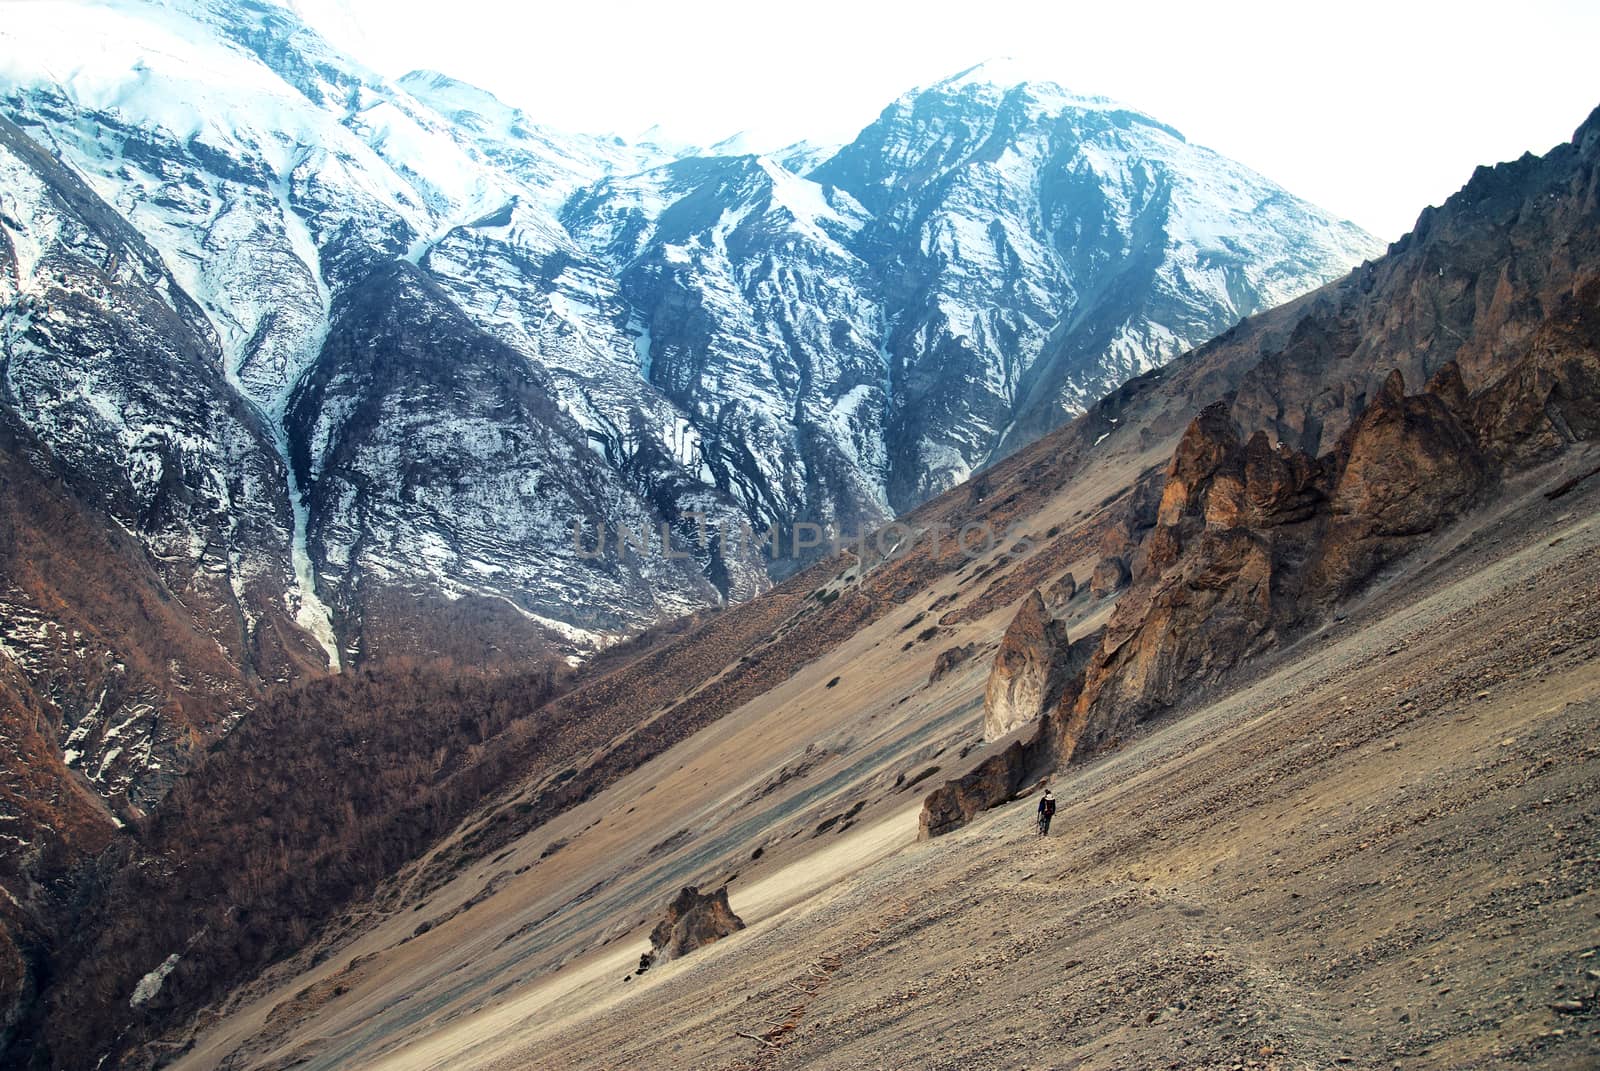 View of Himalayas mountains by vapi